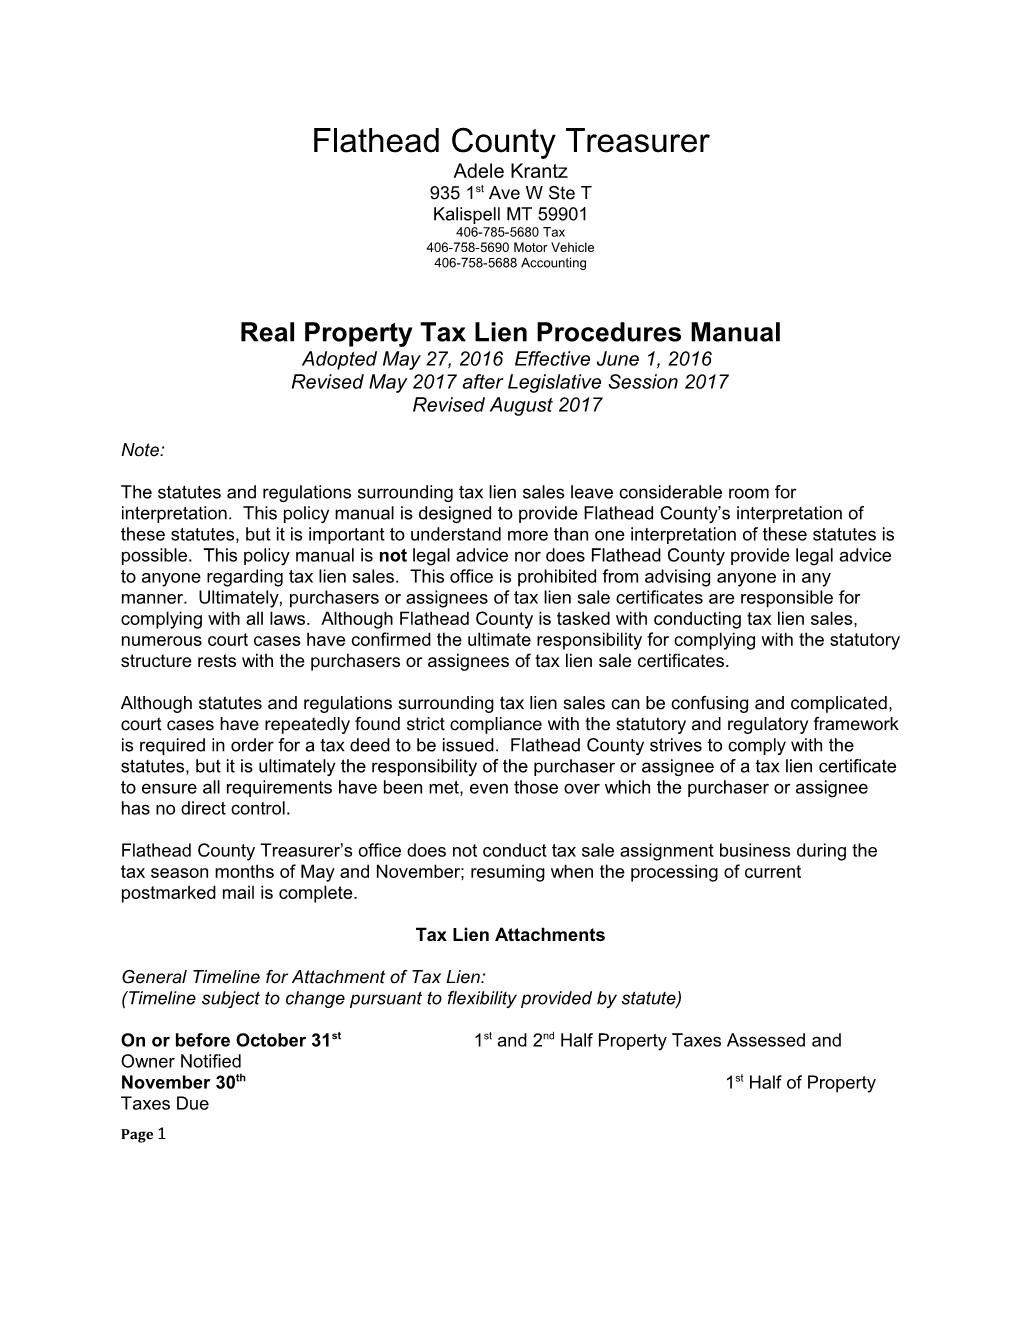 Real Property Tax Lien Procedures Manual